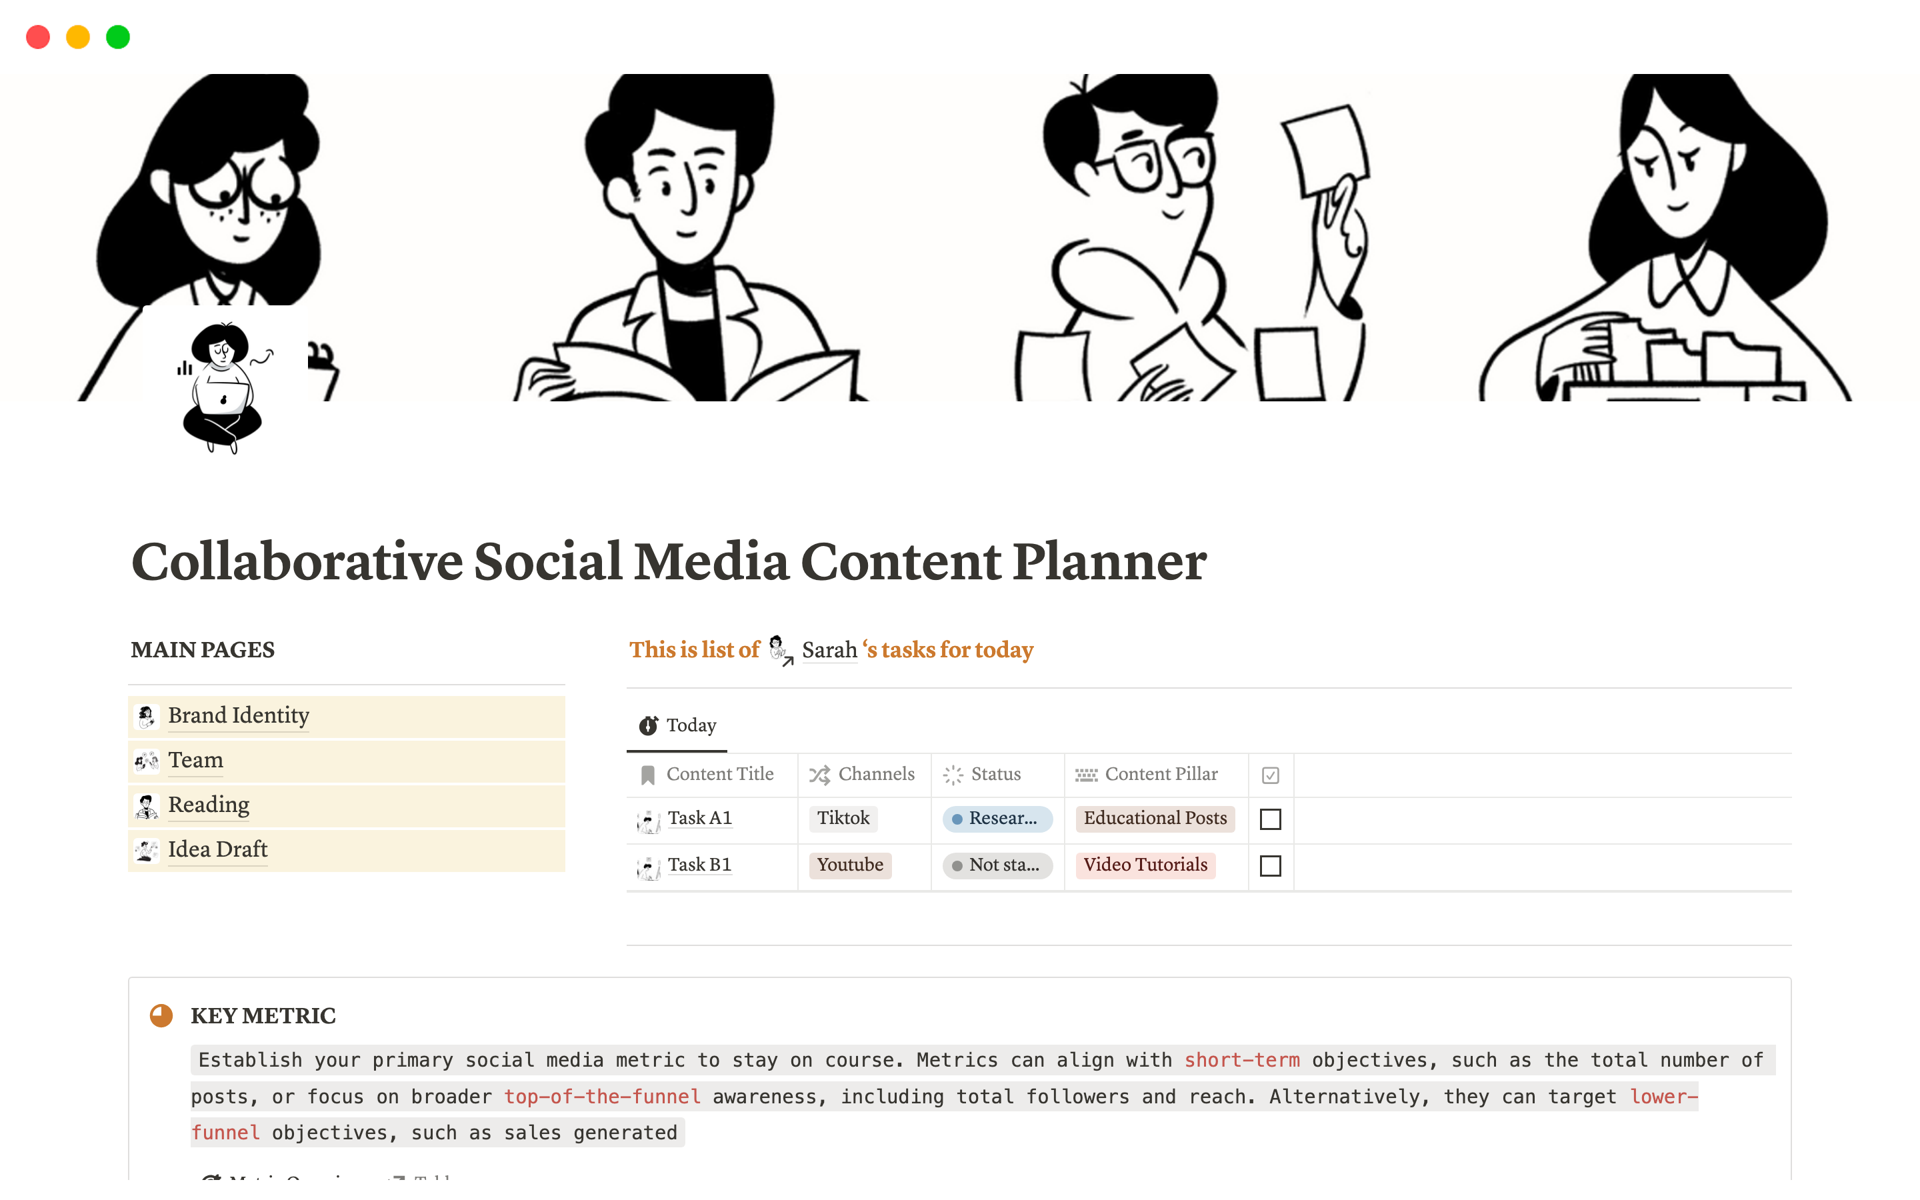 Mallin esikatselu nimelle Social Media Content Planner